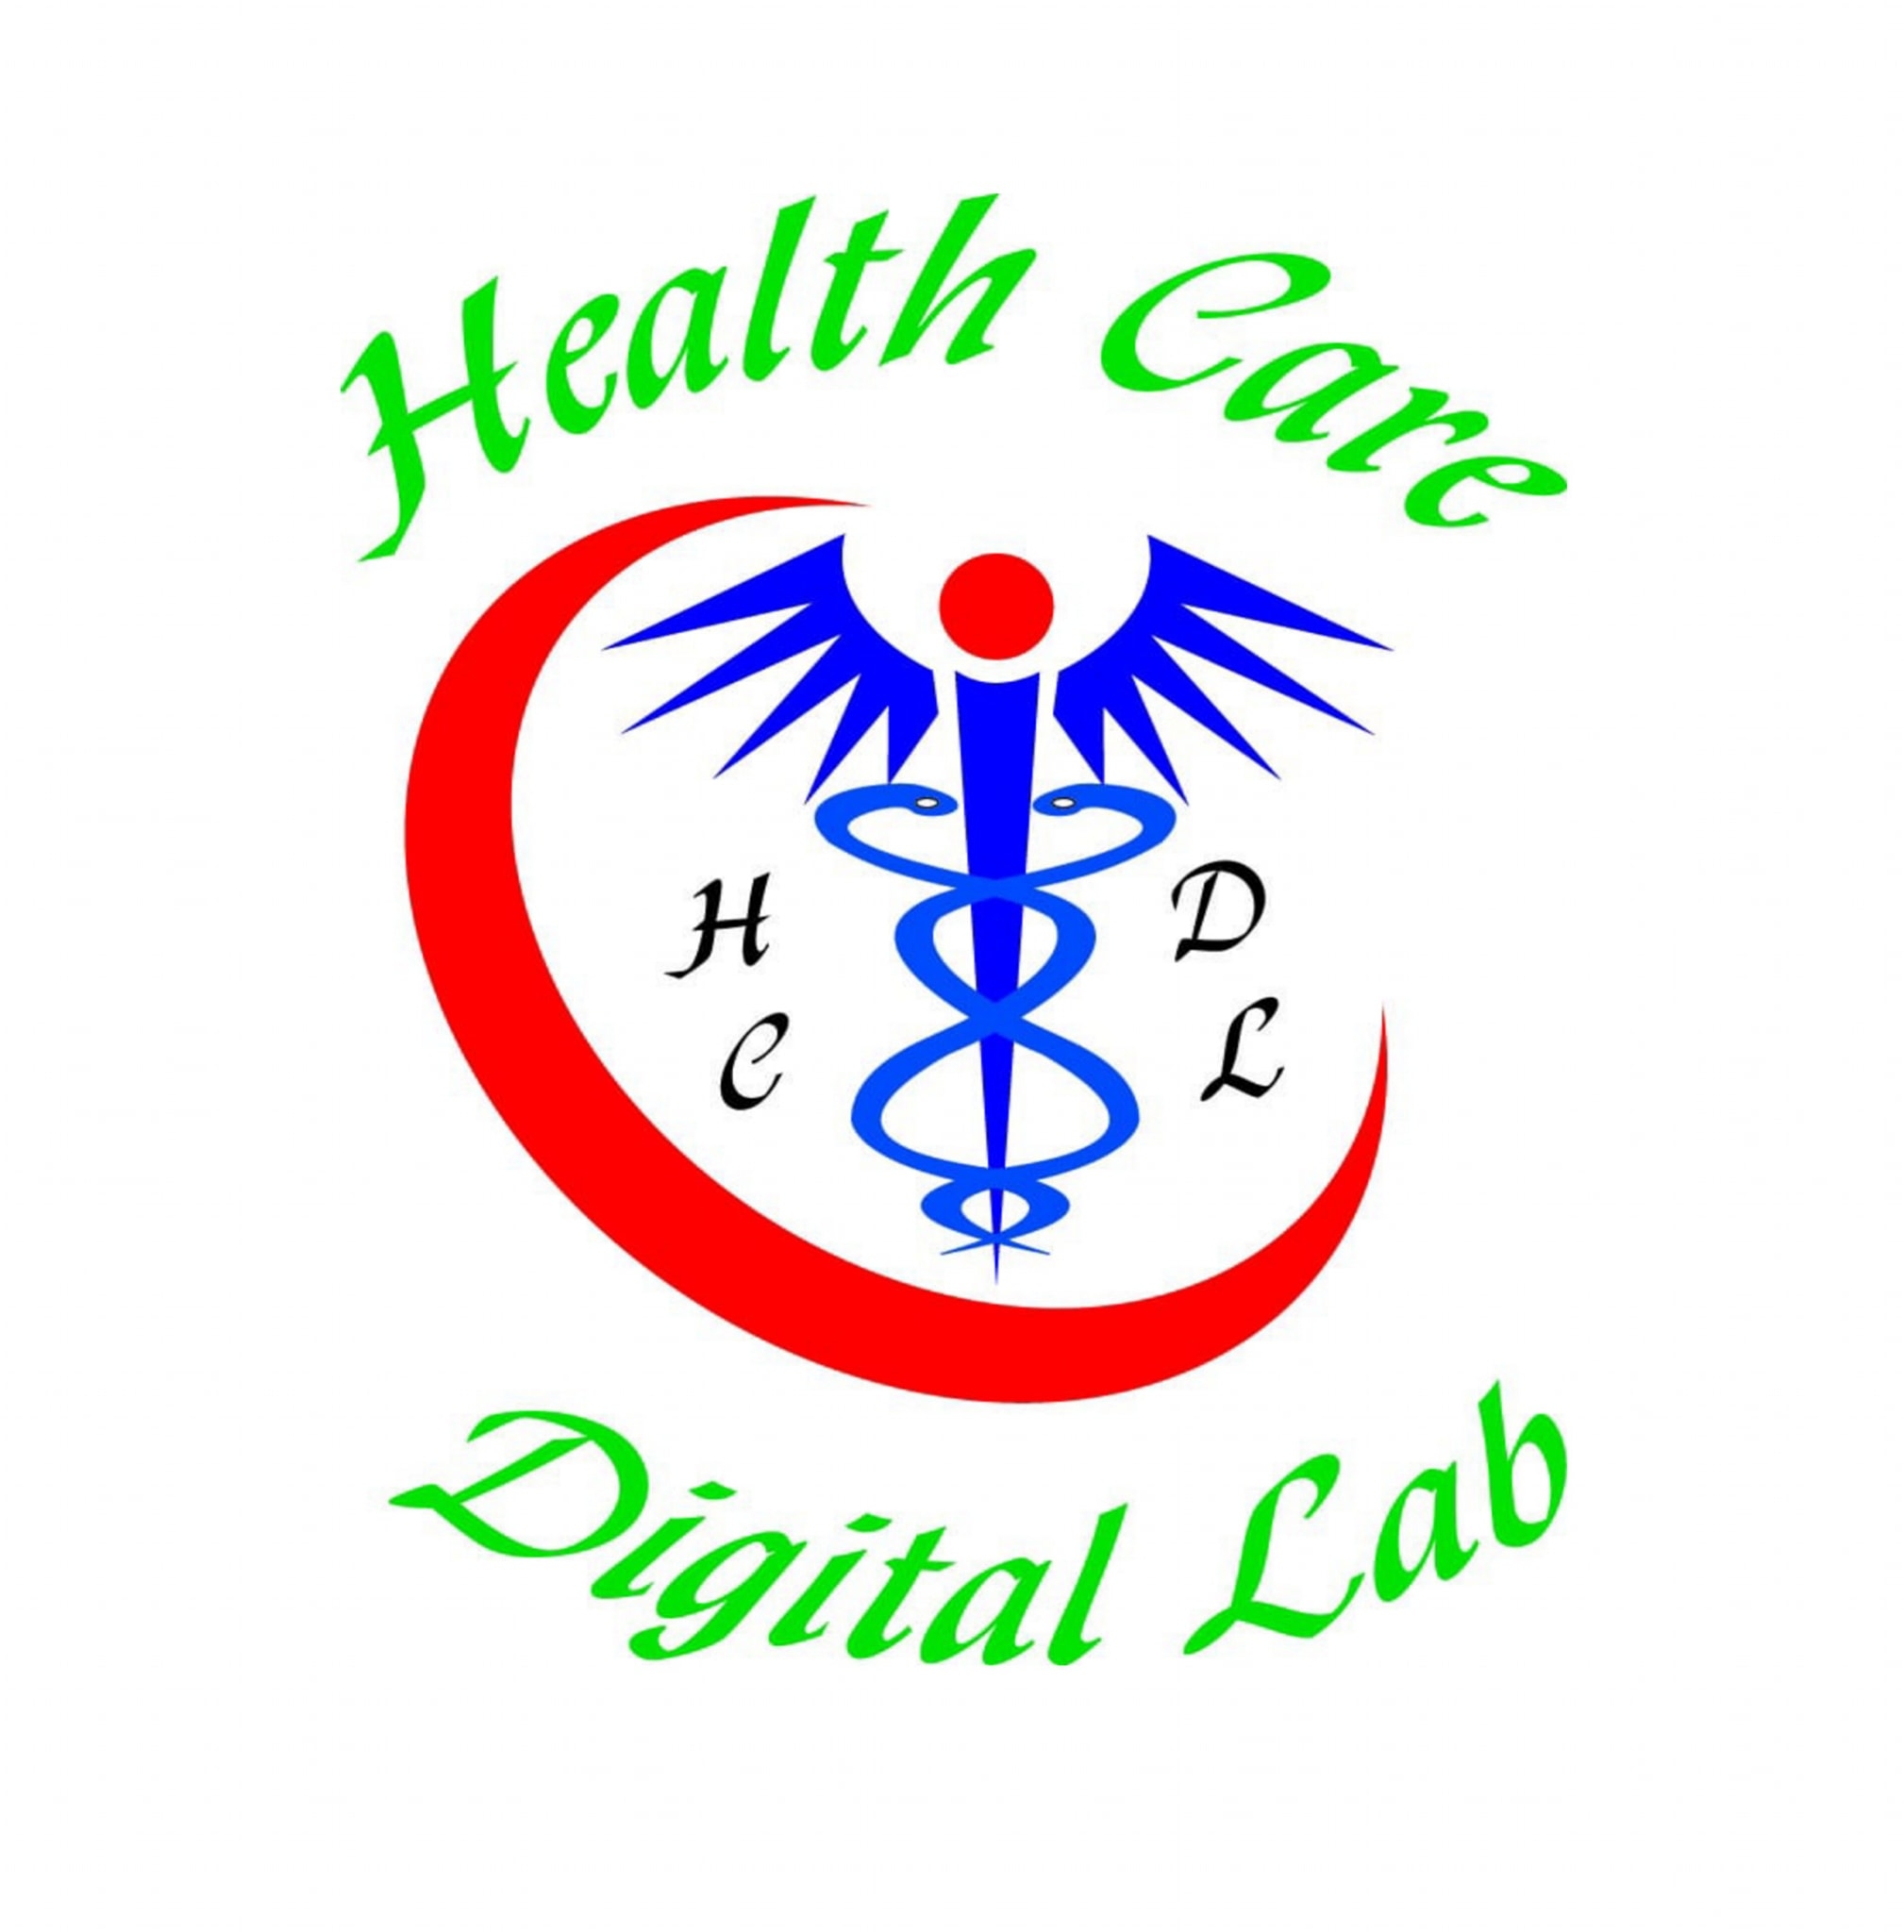 health care digital lab